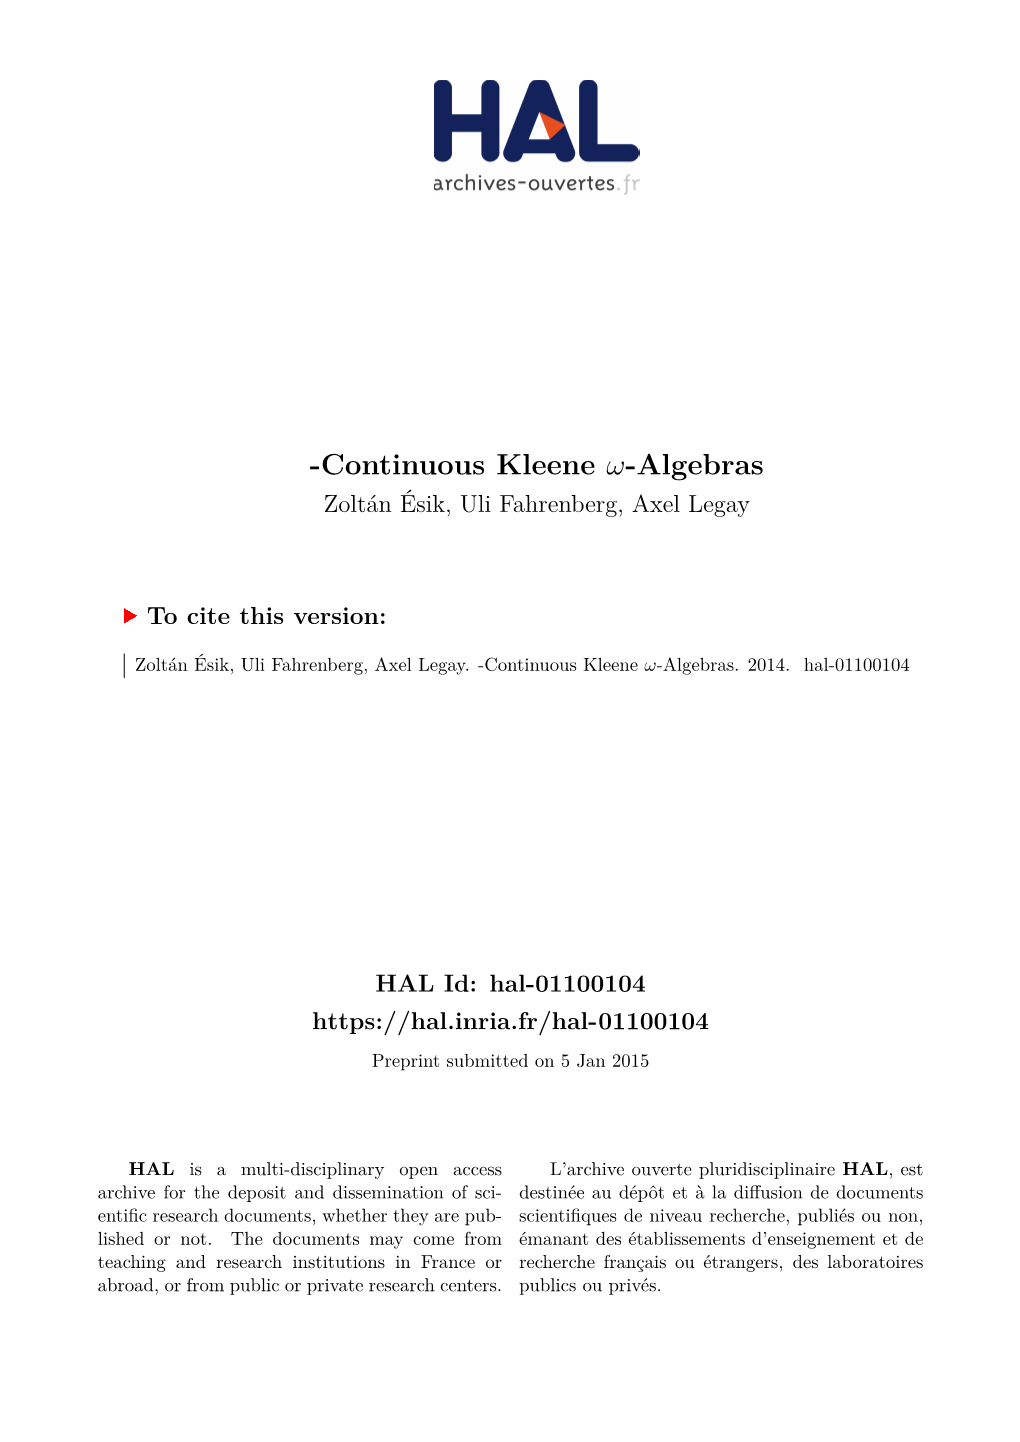 Continuous Kleene -Algebras